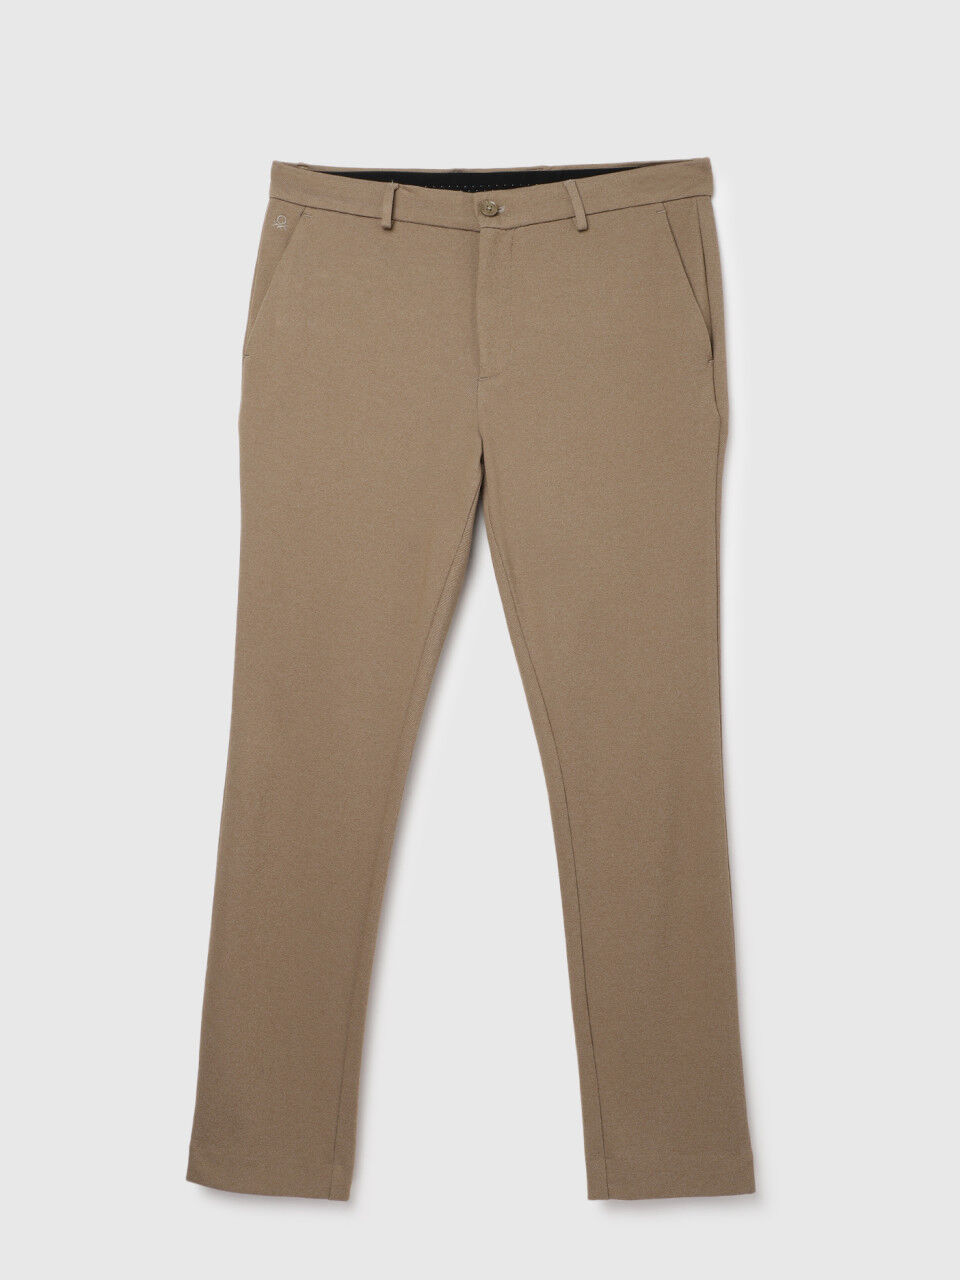 UNITED COLORS OF BENETTON Women Dark Grey Regular Fit Trousers Size EUR 38  W23 | eBay